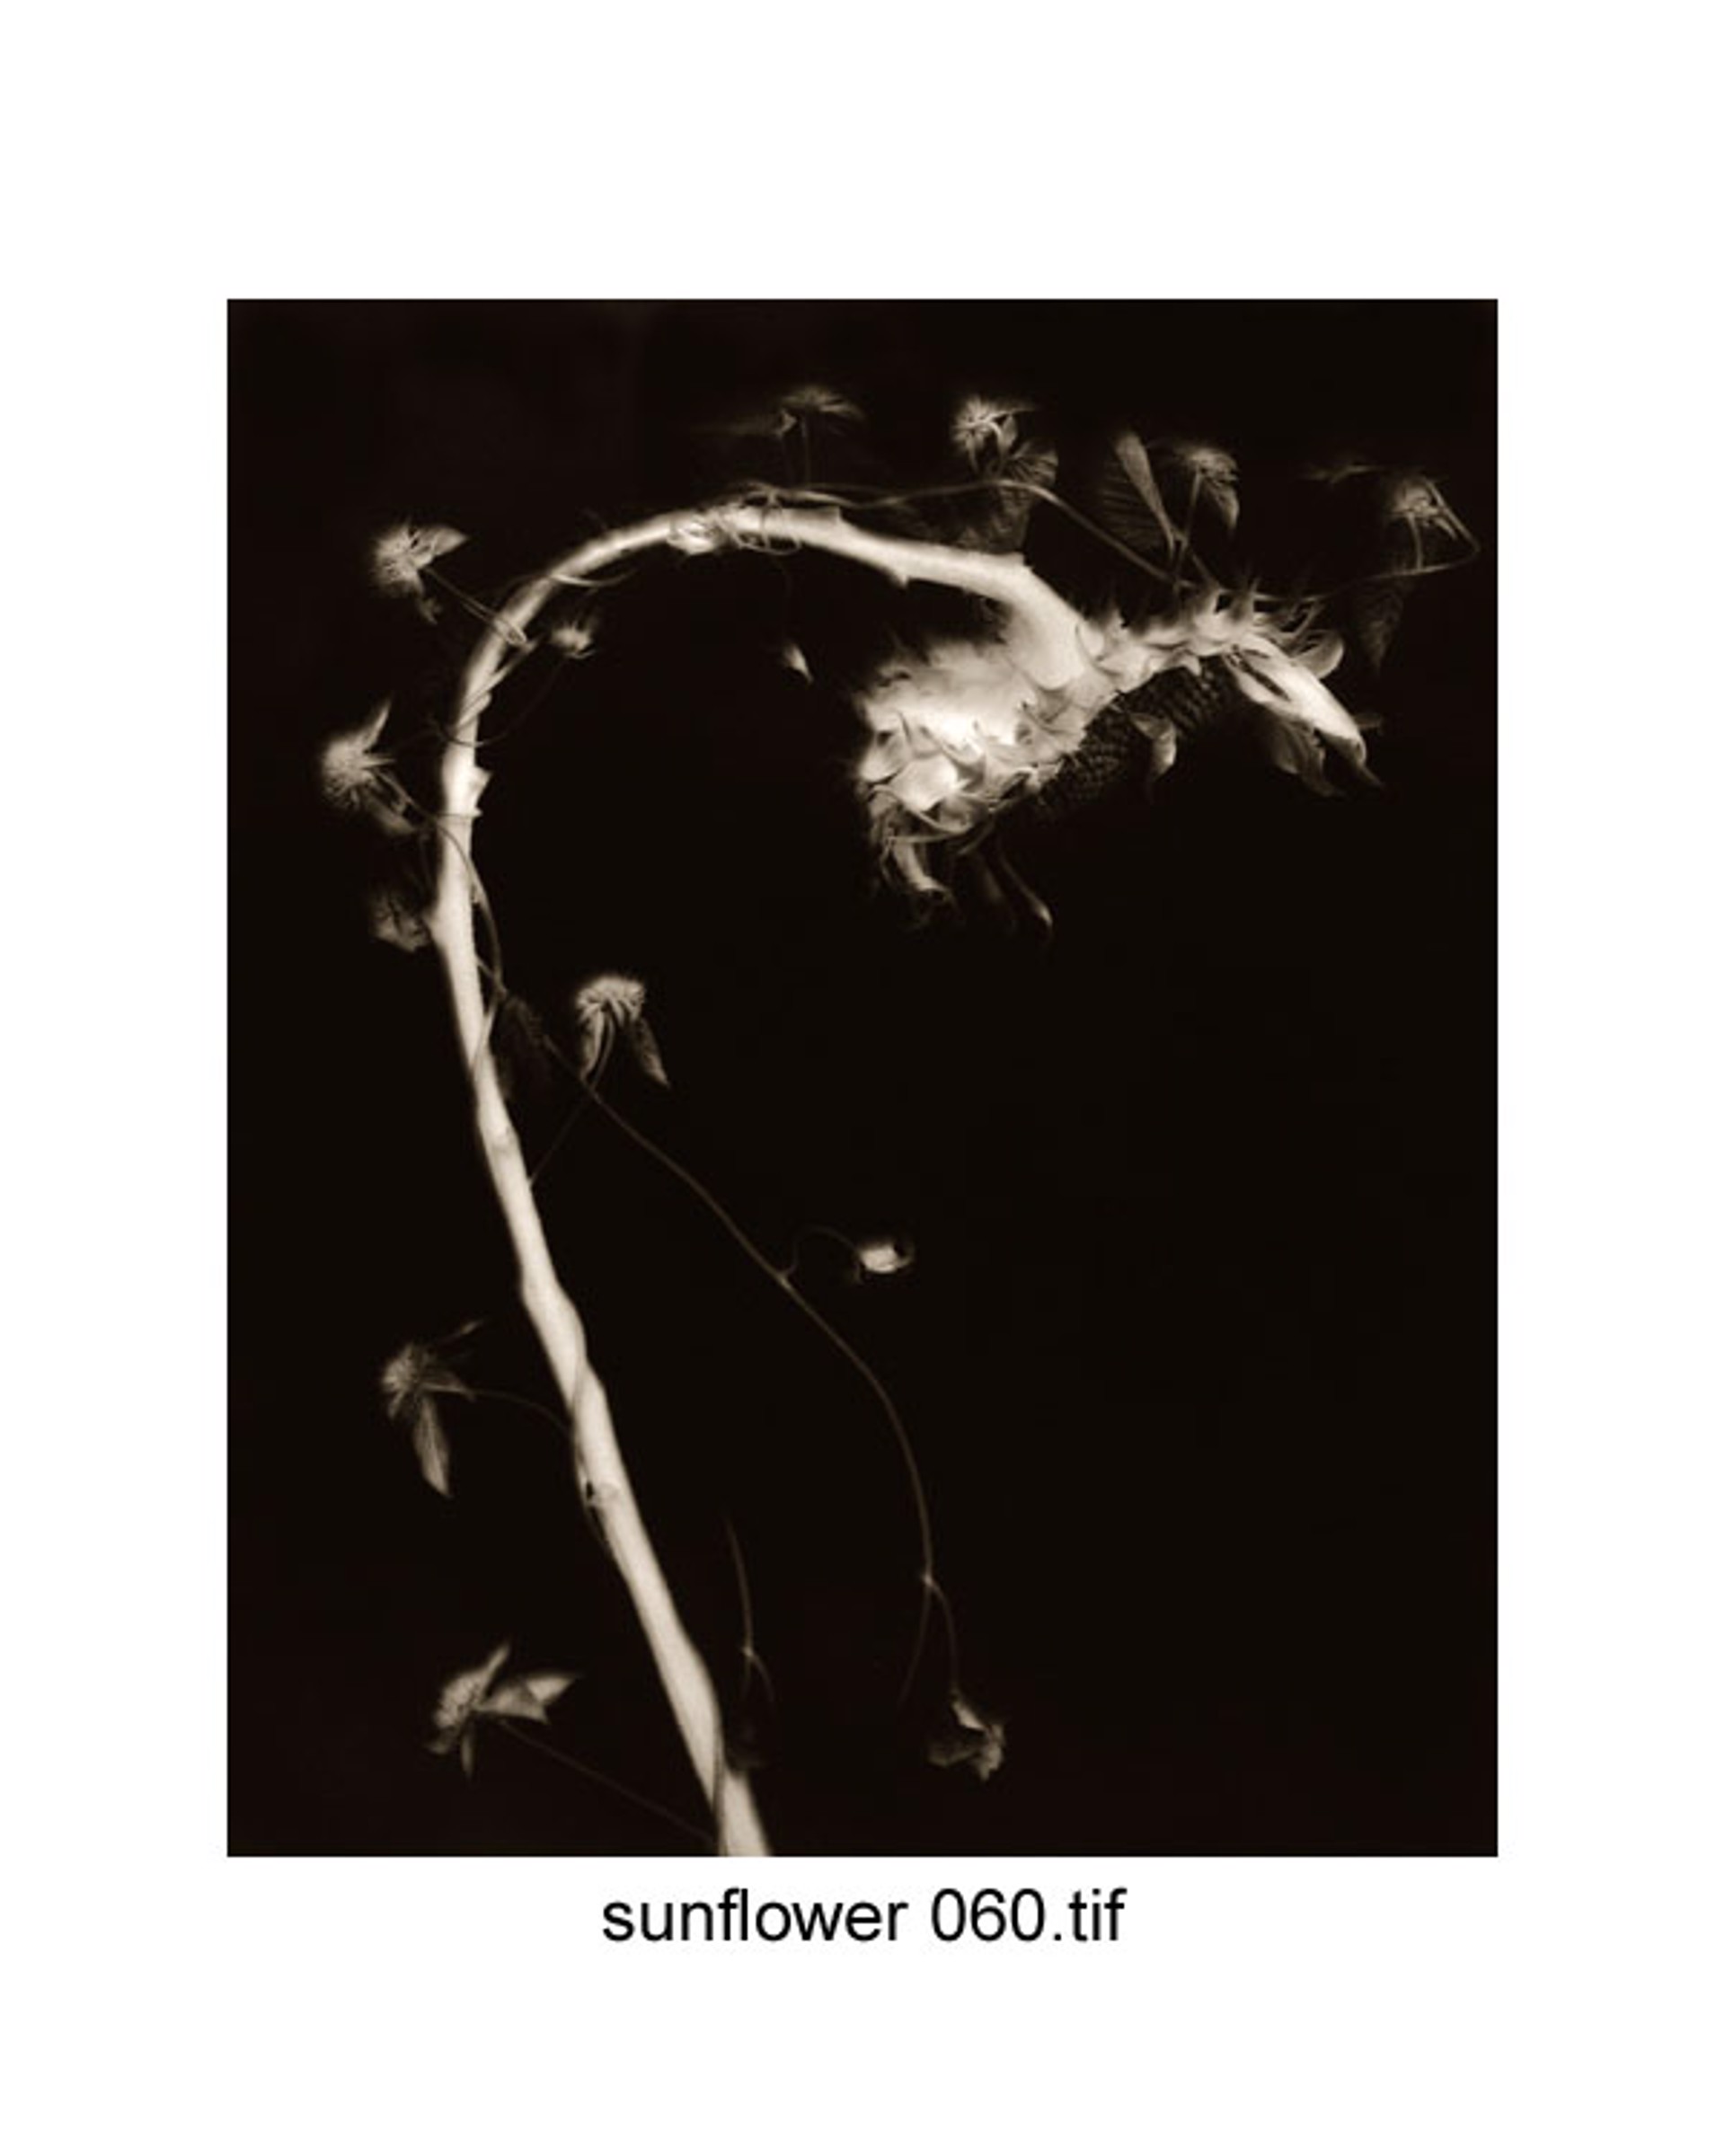 Sunflower #60 (2/21) by Frank Hunter